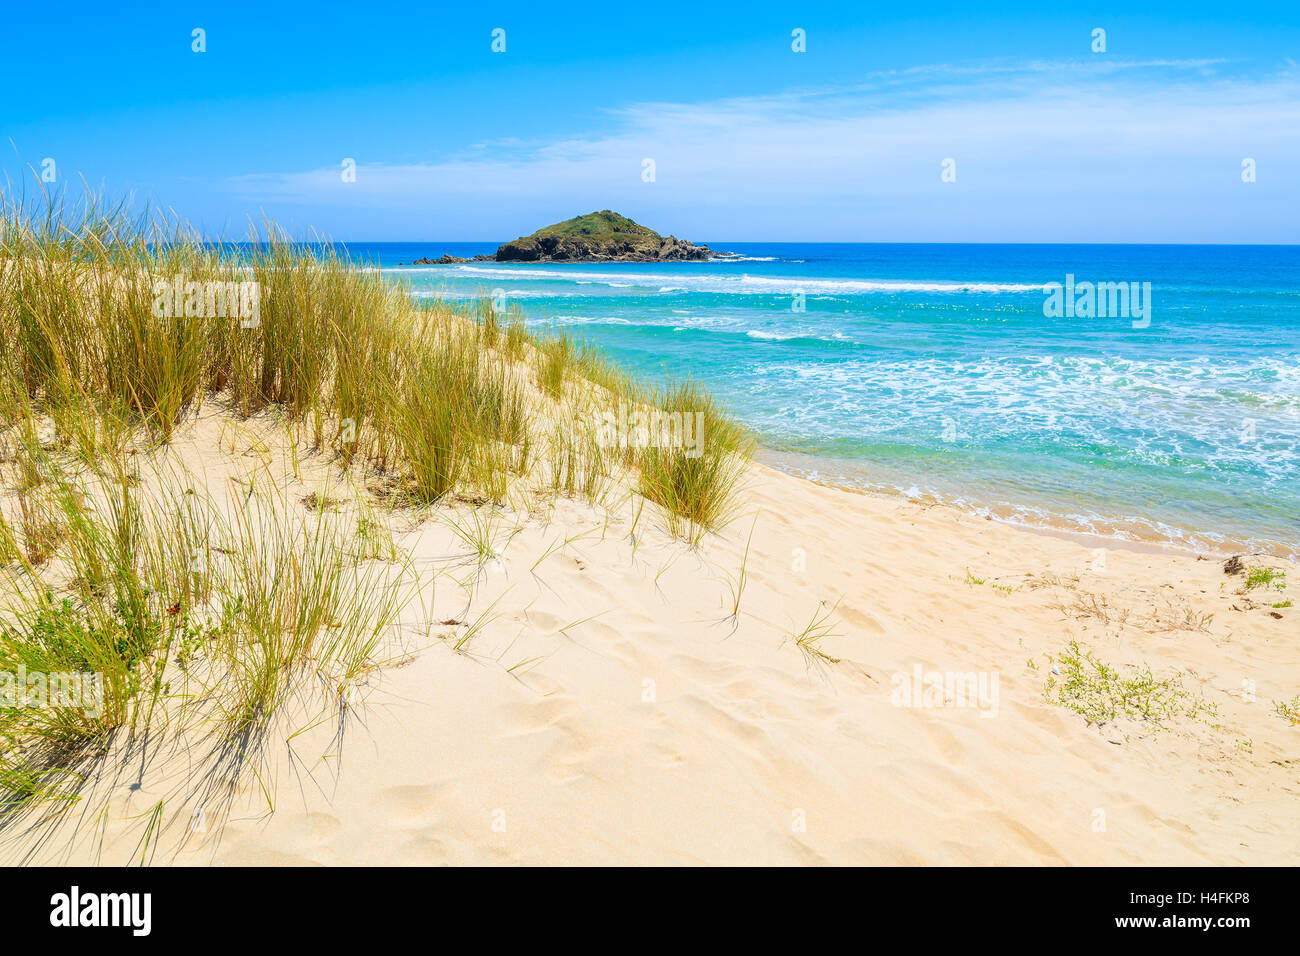 Grass on sand dune at Chia beach and turquoise sea view, Sardinia island, Italy Stock Photo